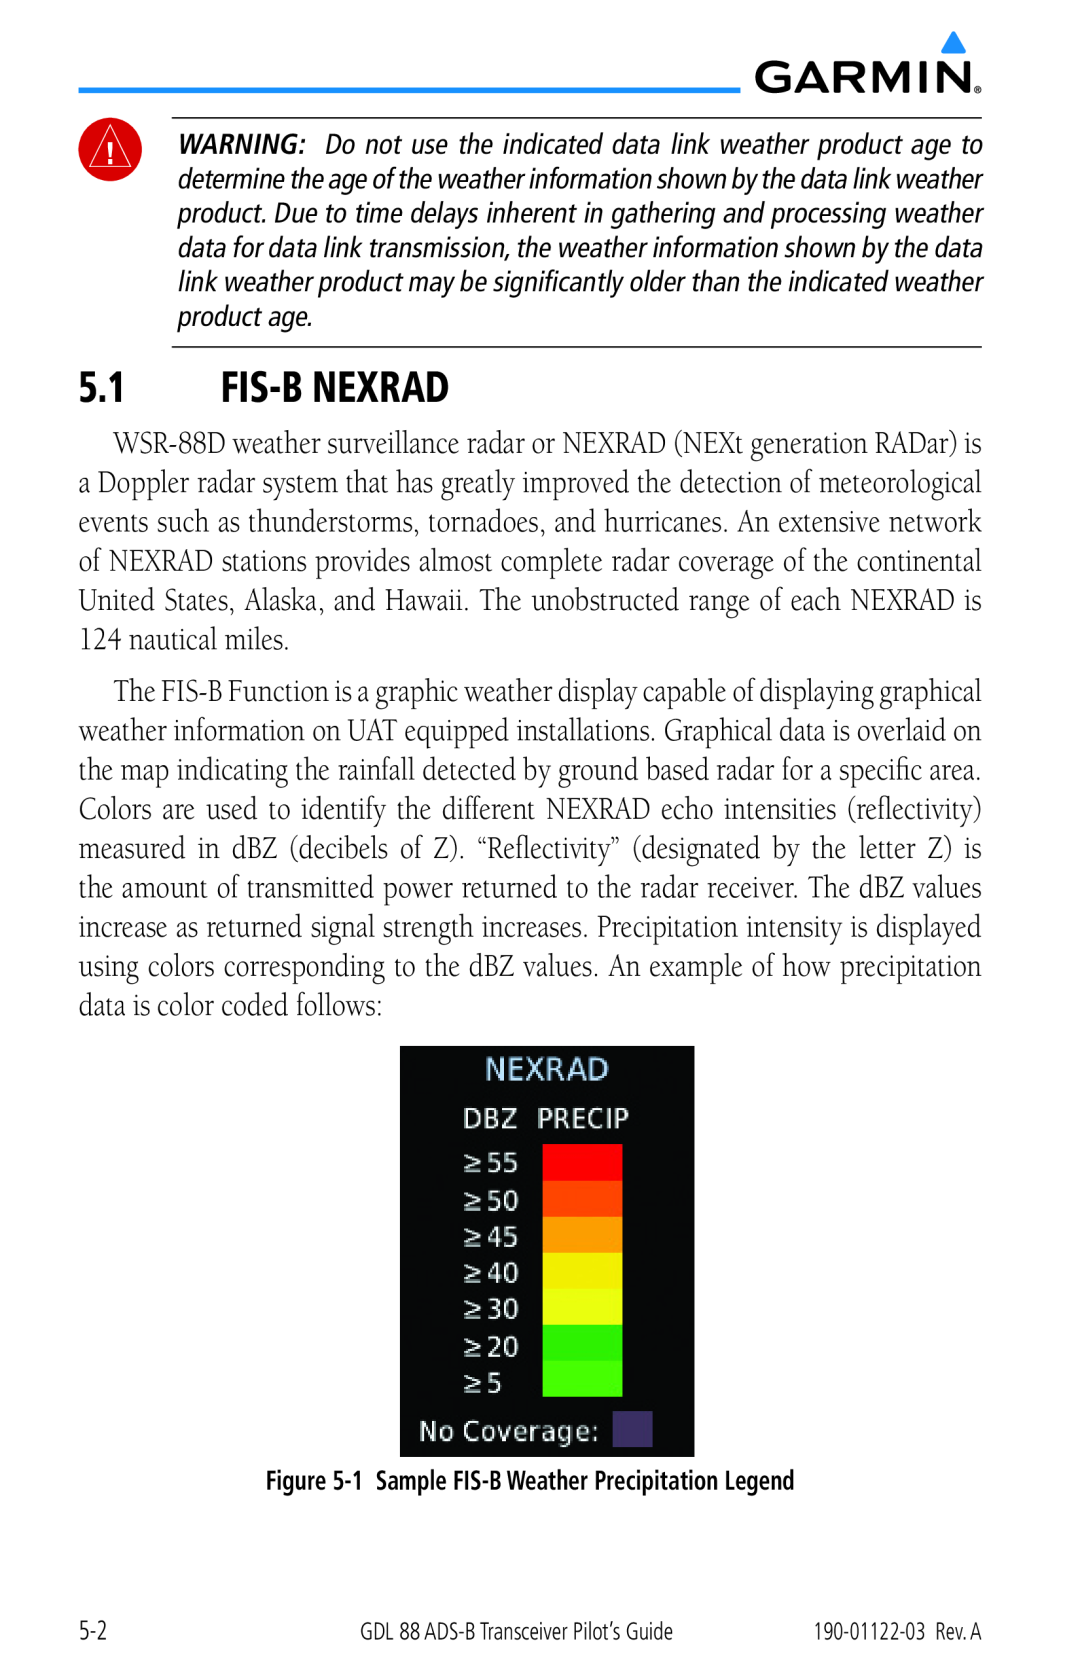 Garmin GDL 88 manual Fis-B Nexrad, data is color coded follows, 1 Sample FIS-B Weather Precipitation Legend 